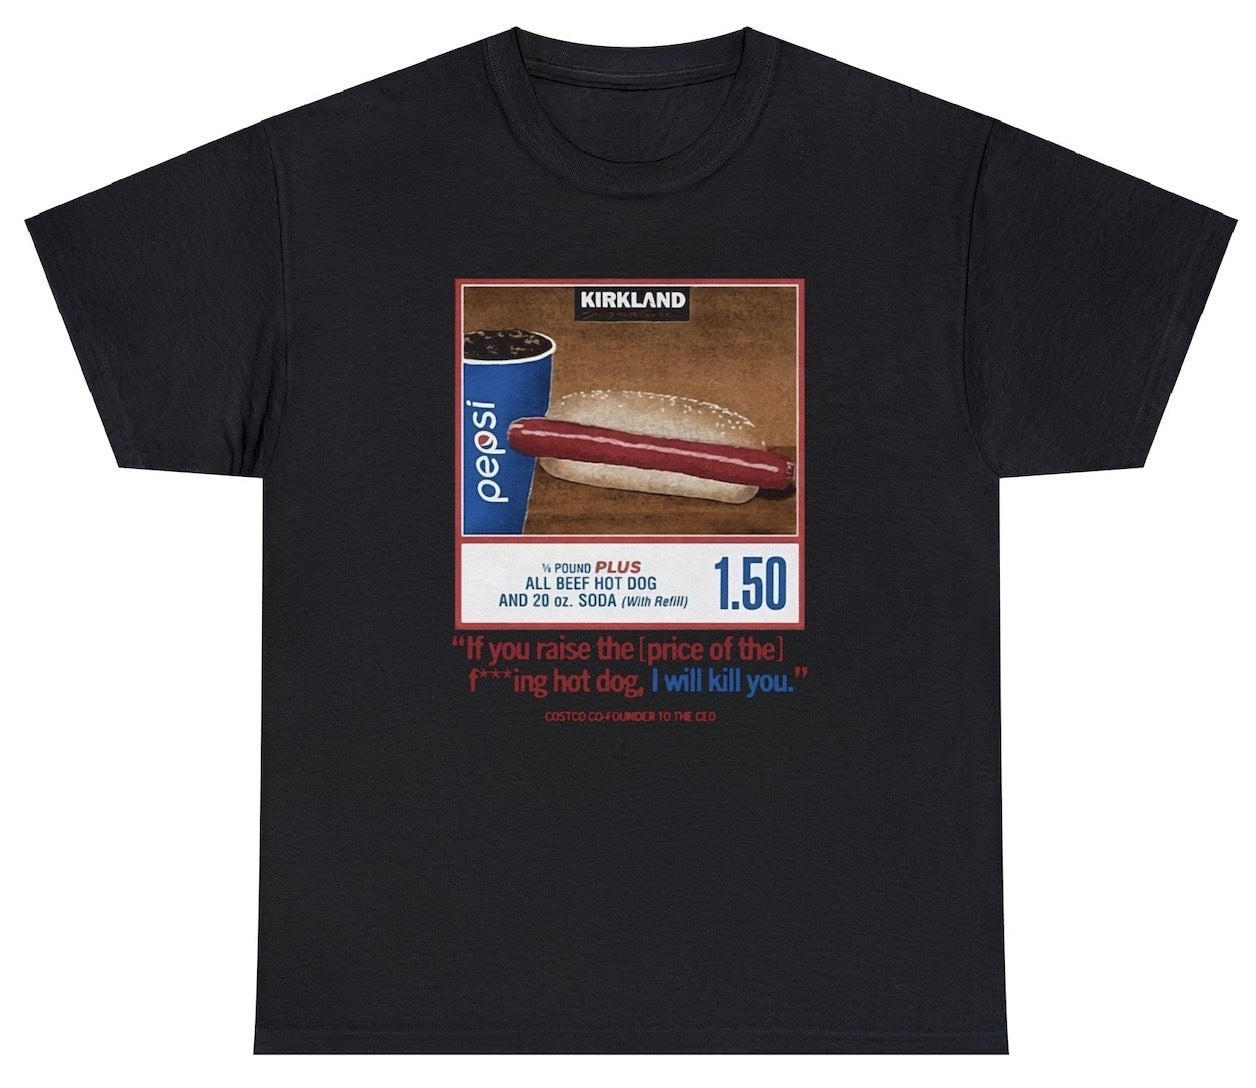 AAA Costco Hotdog Shirt - If You Raise The Price I'll Kill You T Shirt